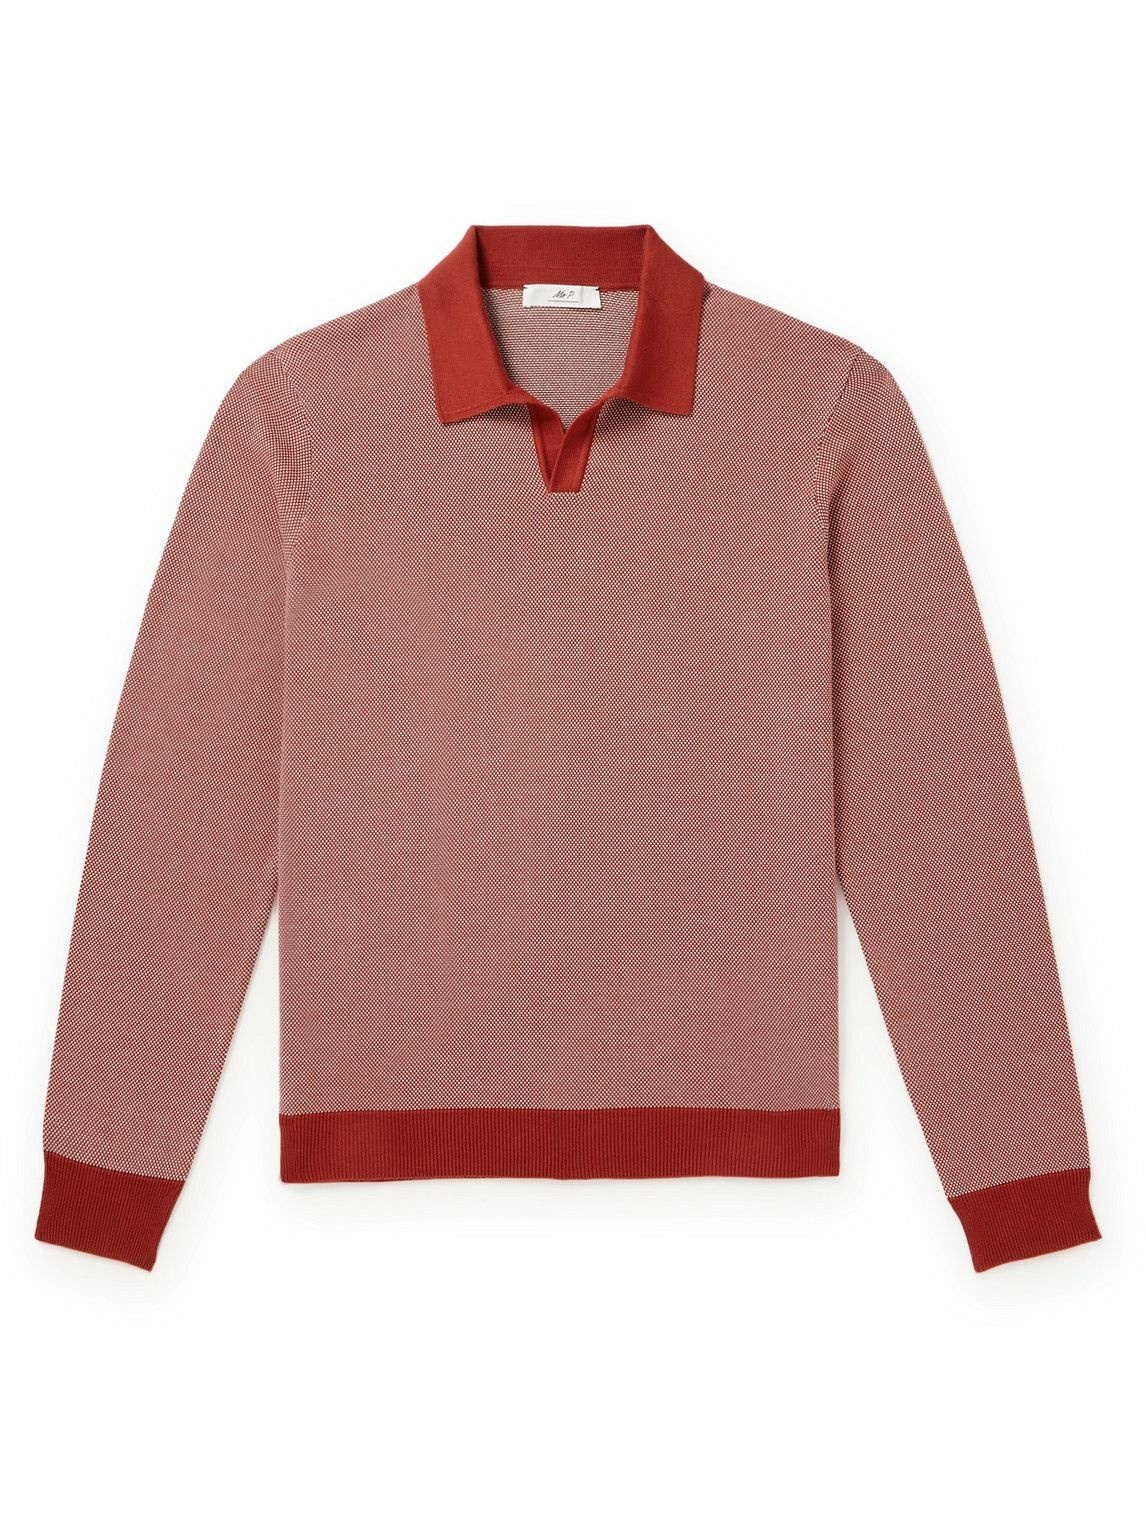 Photo: Mr P. - Johnny Birdseye Cotton Polo Shirt - Red